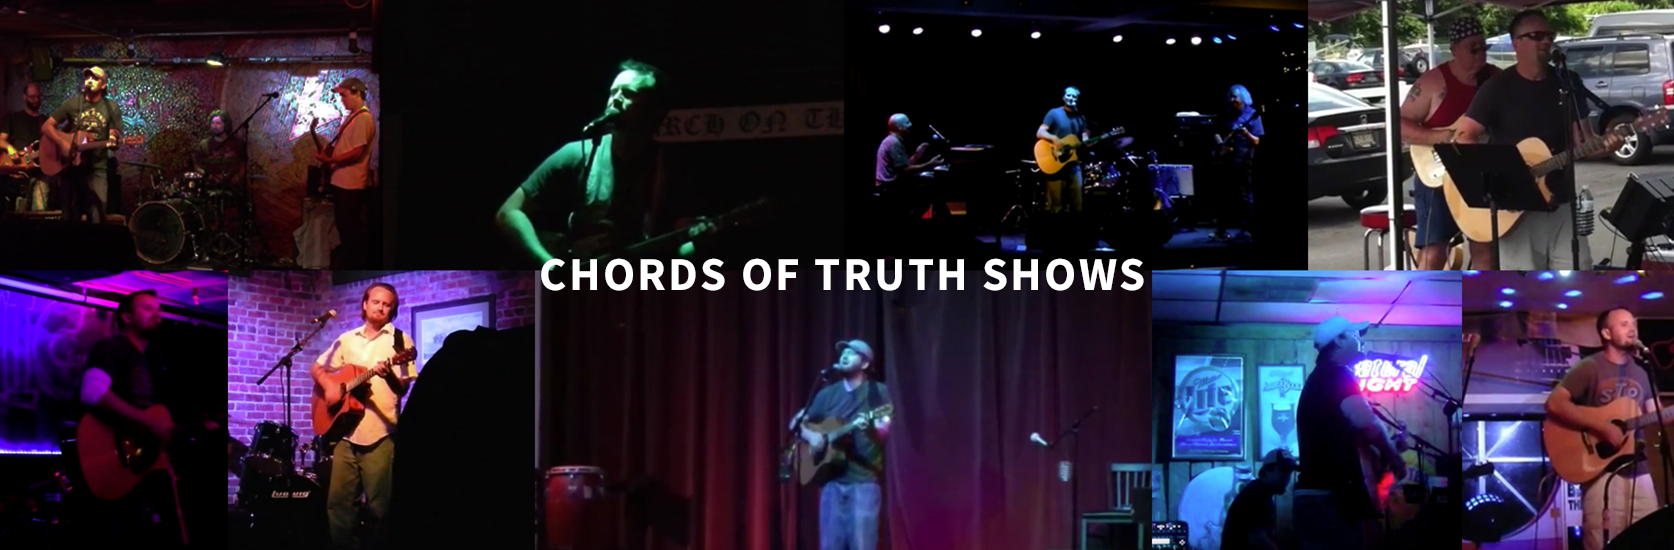 Shows / Tour | Chords of Truth | Acoustic Folk Singer/Songwriter | Jason Garriotte